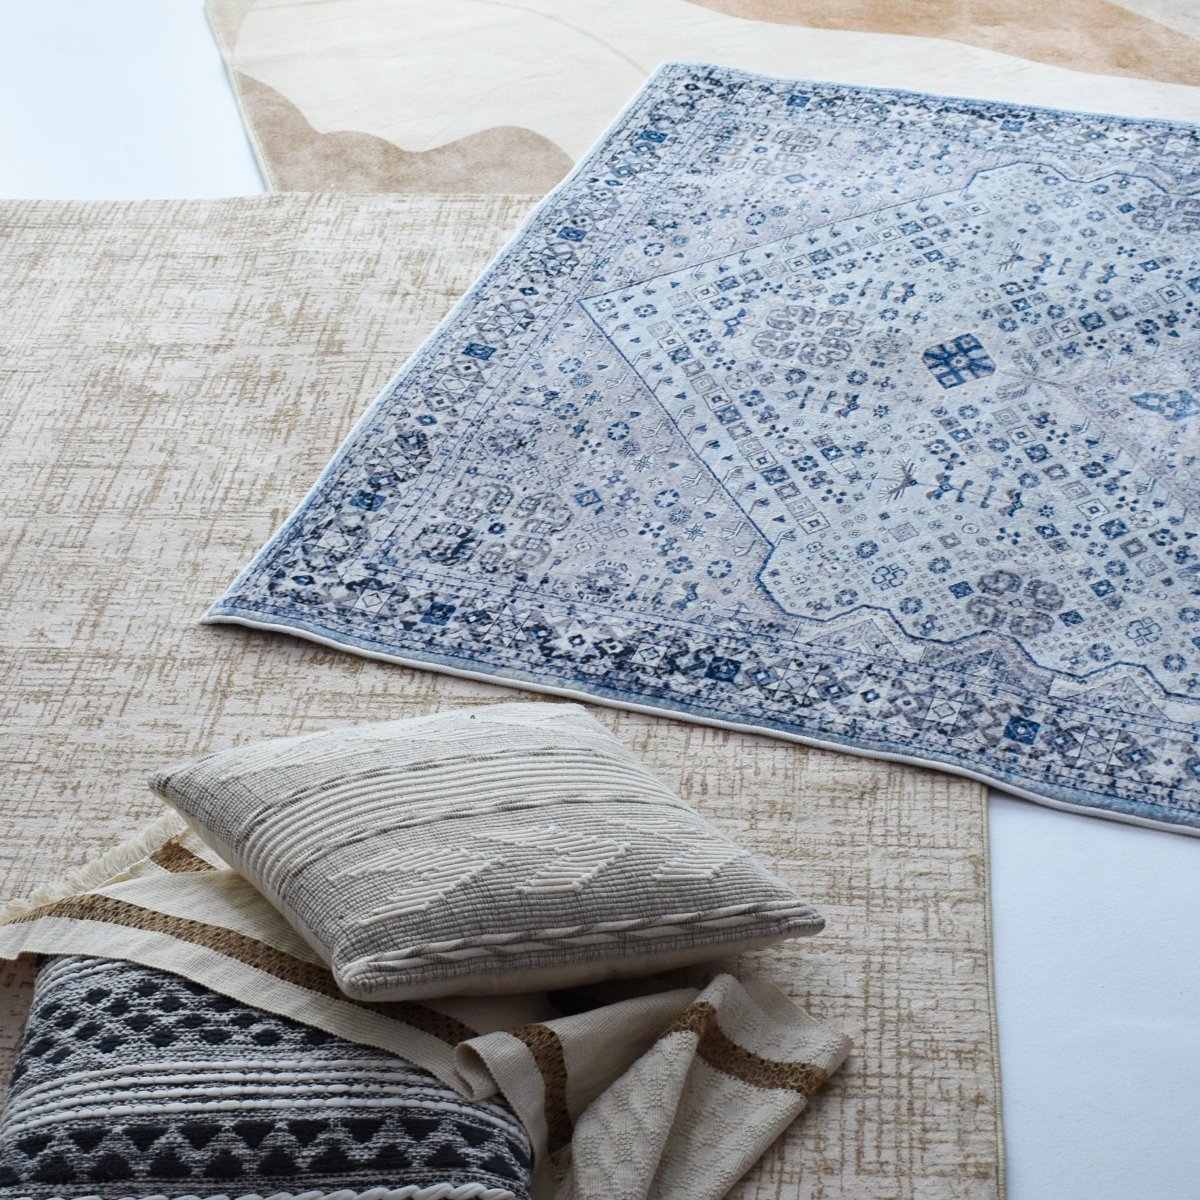 P-8767 Persian Carpet | Polyfibre Cashmere Series - The Carpetier™